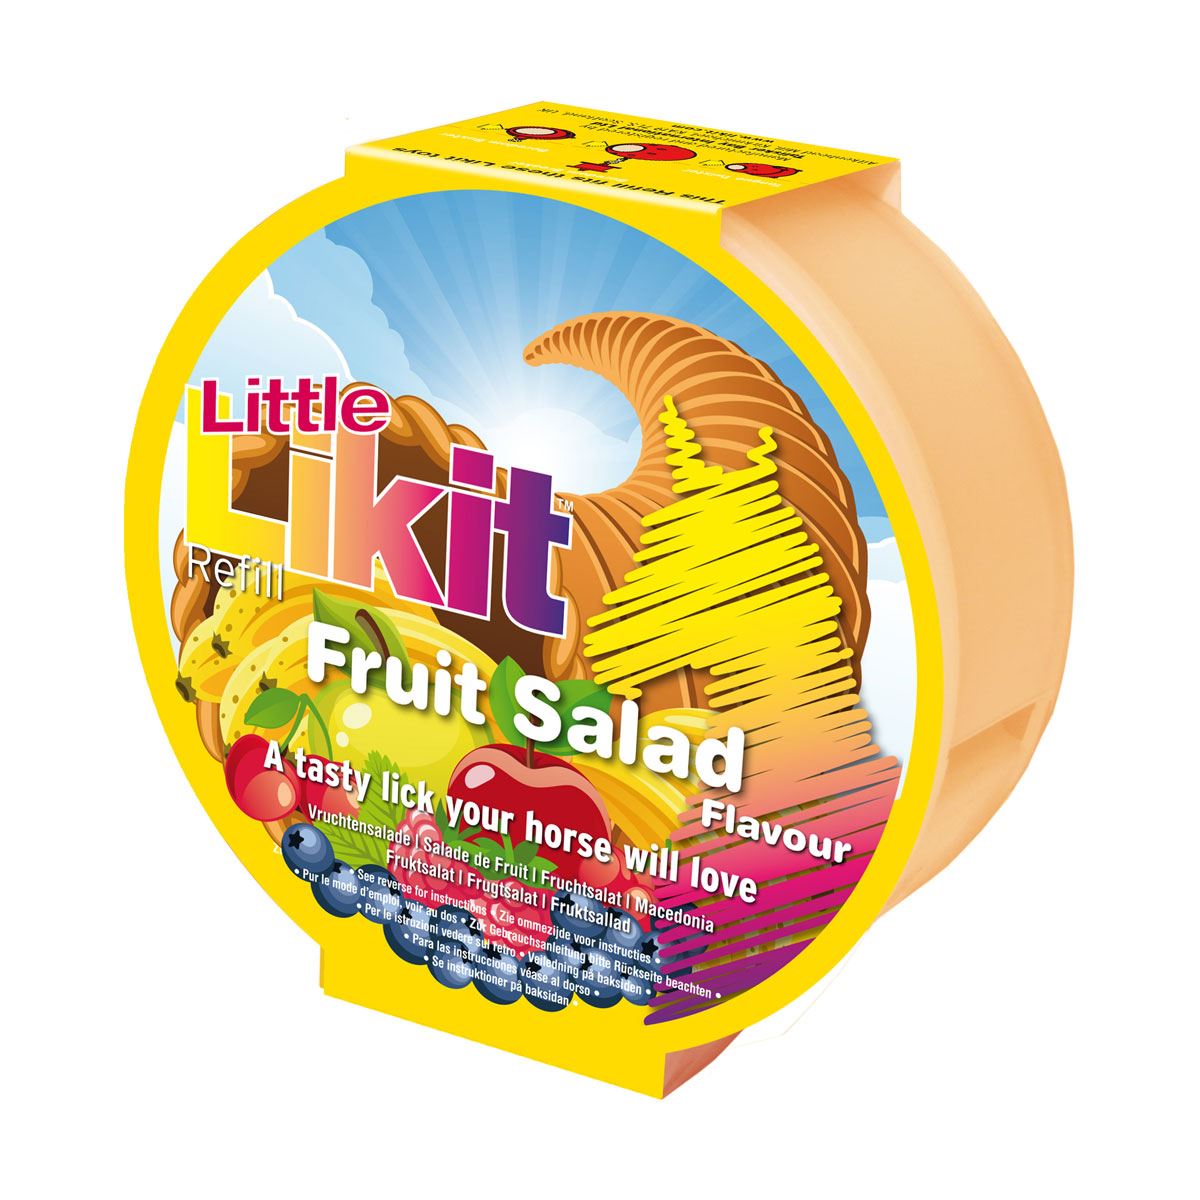 Little Likit Fruit Salad - Just Horse Riders